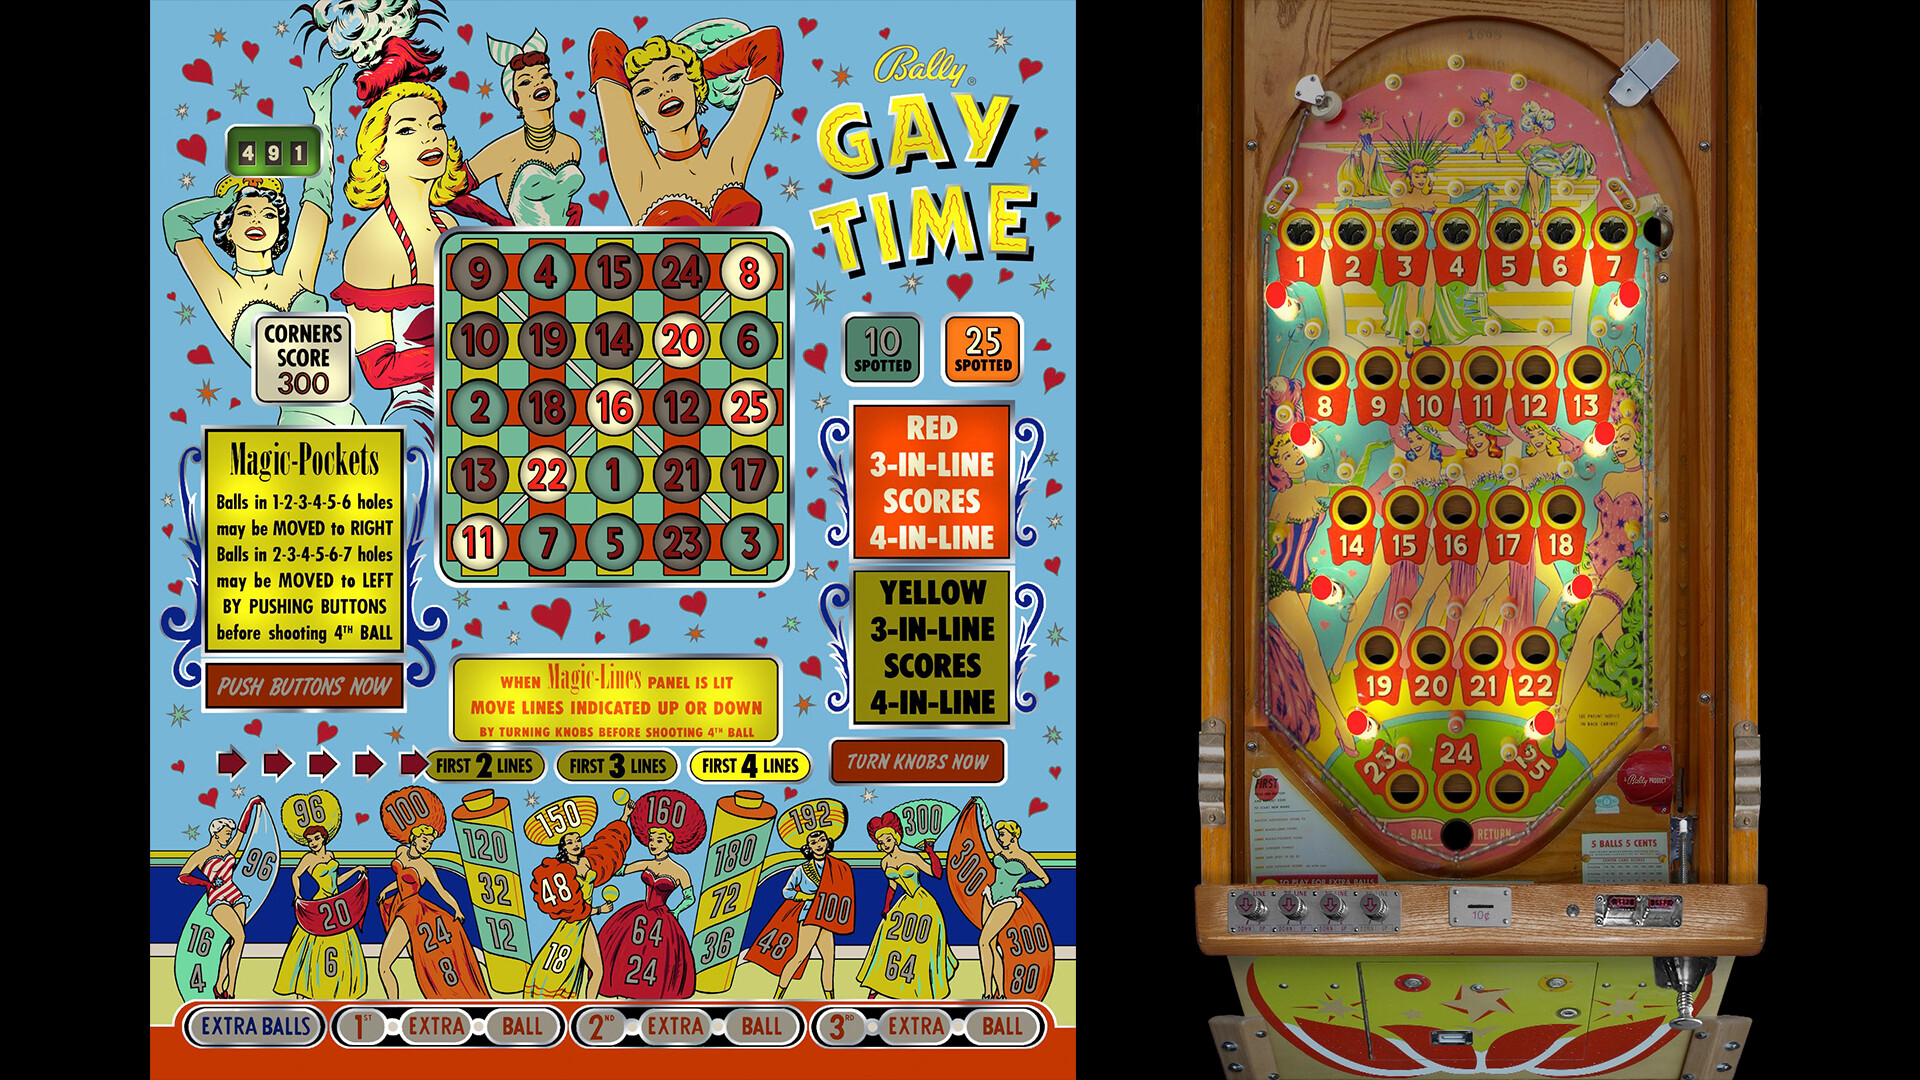 Bingo Pinball Gameroom - Bally Gay Time Featured Screenshot #1